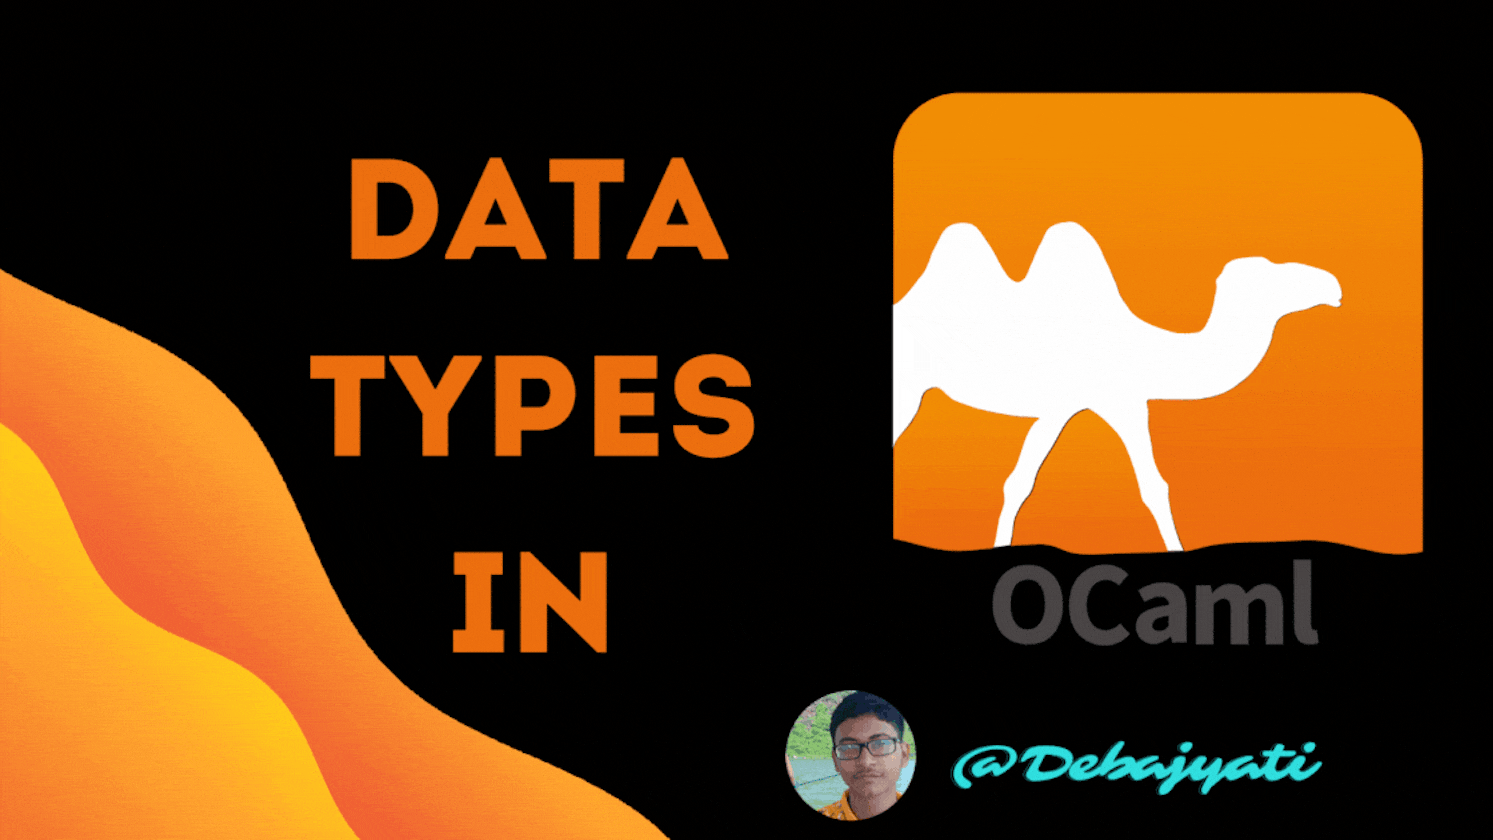 Data Types in OCaml